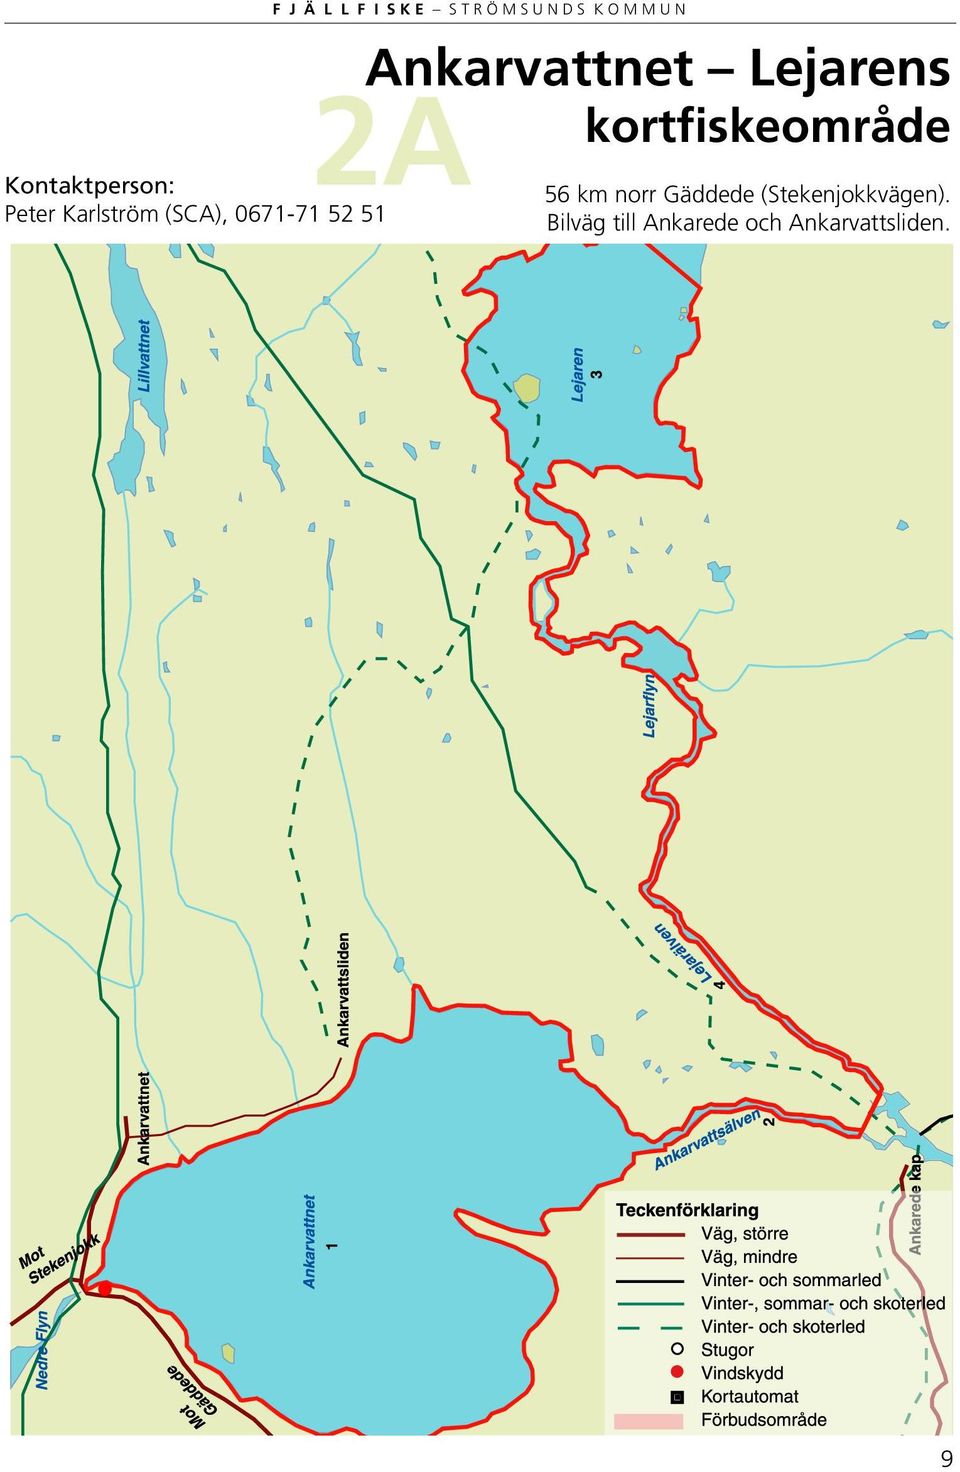 Ankarvattnet Lejarens kortfiskeområde 56 km norr Gäddede